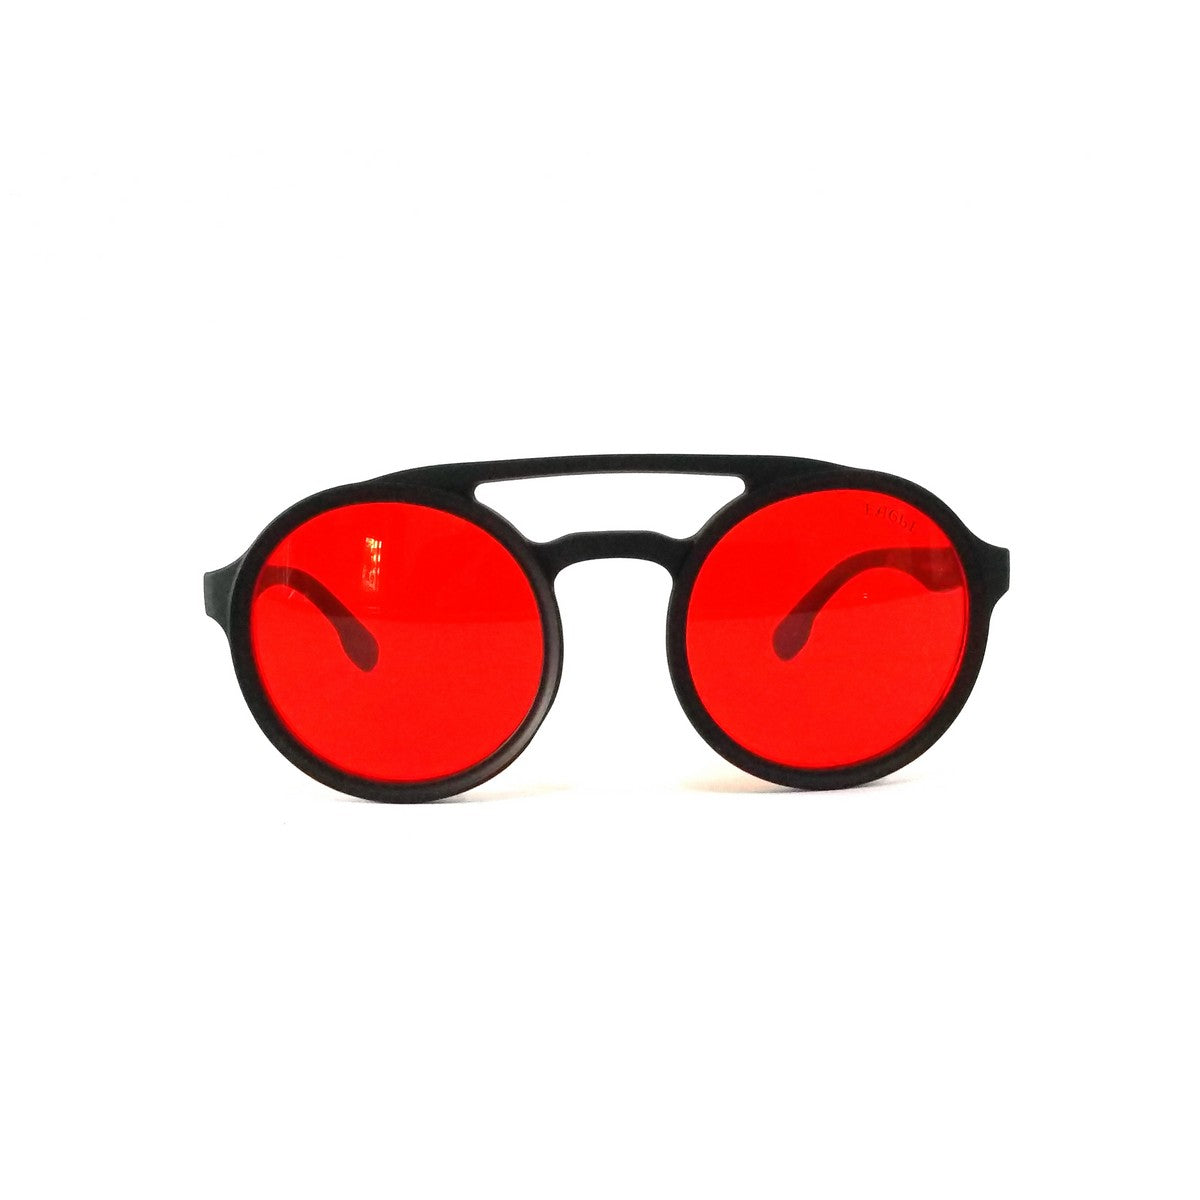 Clubmaster Sunglasses | Ray-Ban® USA